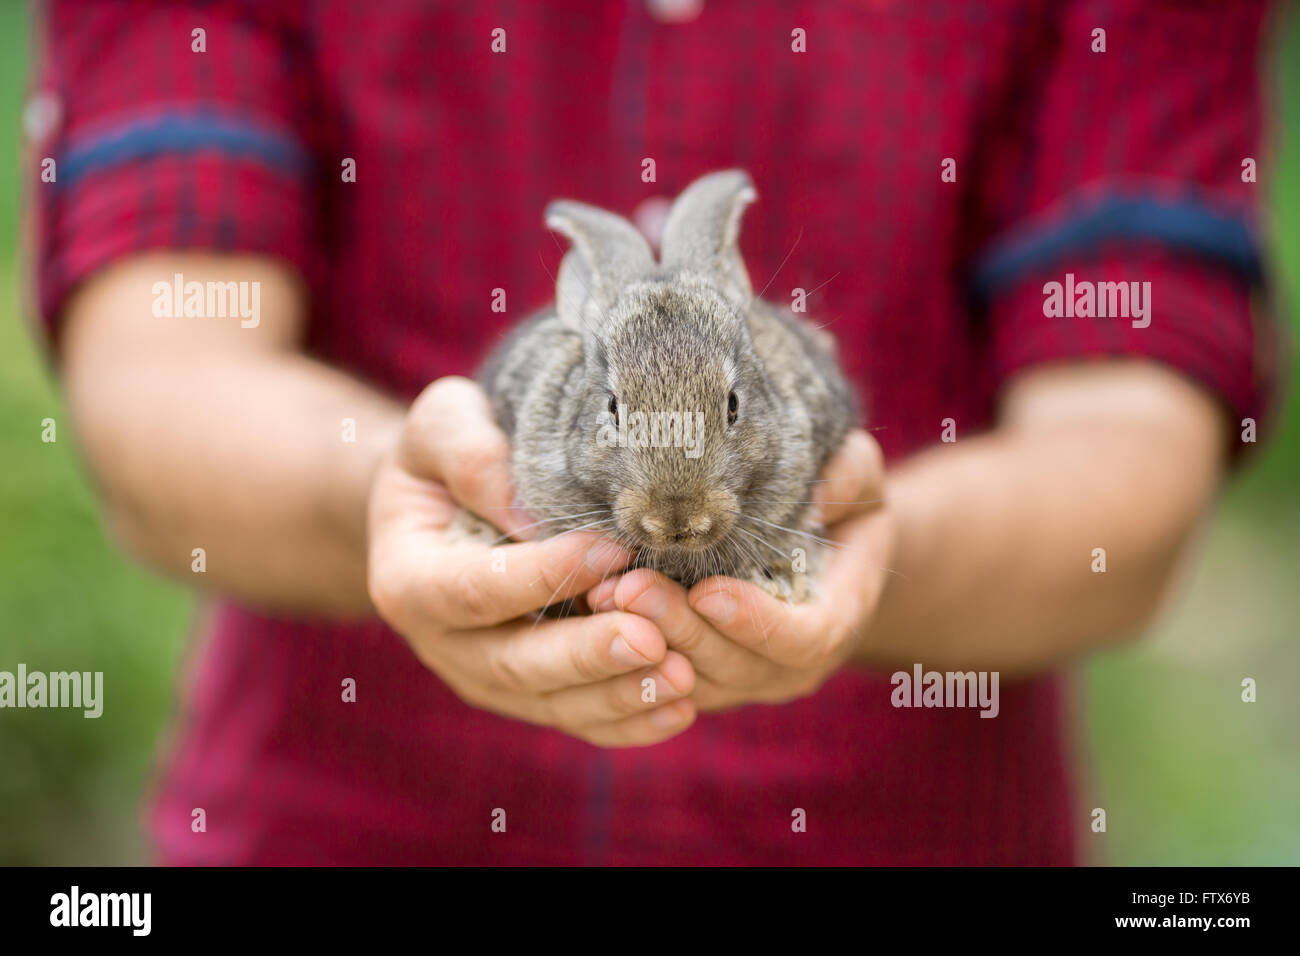 Rabbit. Animals and people Stock Photo